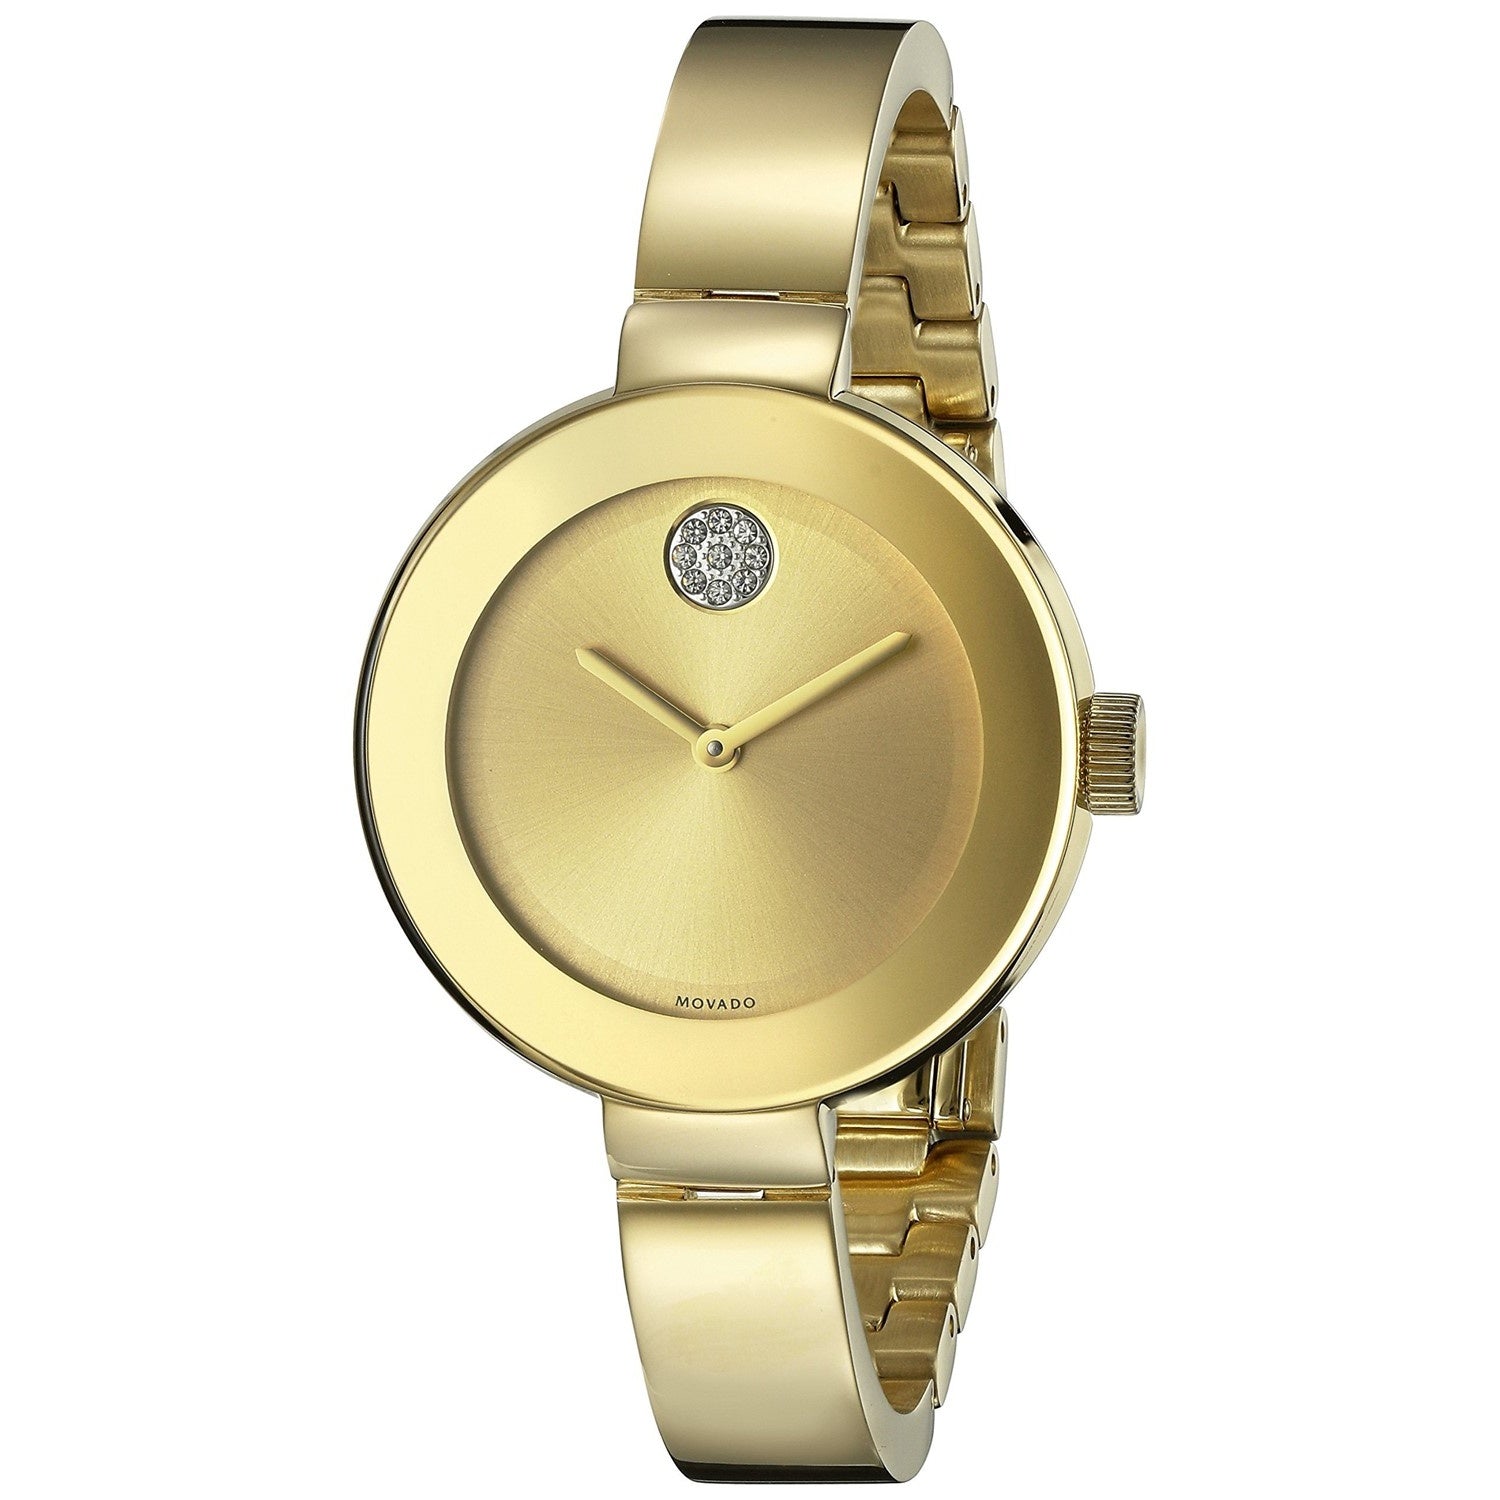 Gold Womens Movado Watch - www.inf-inet.com